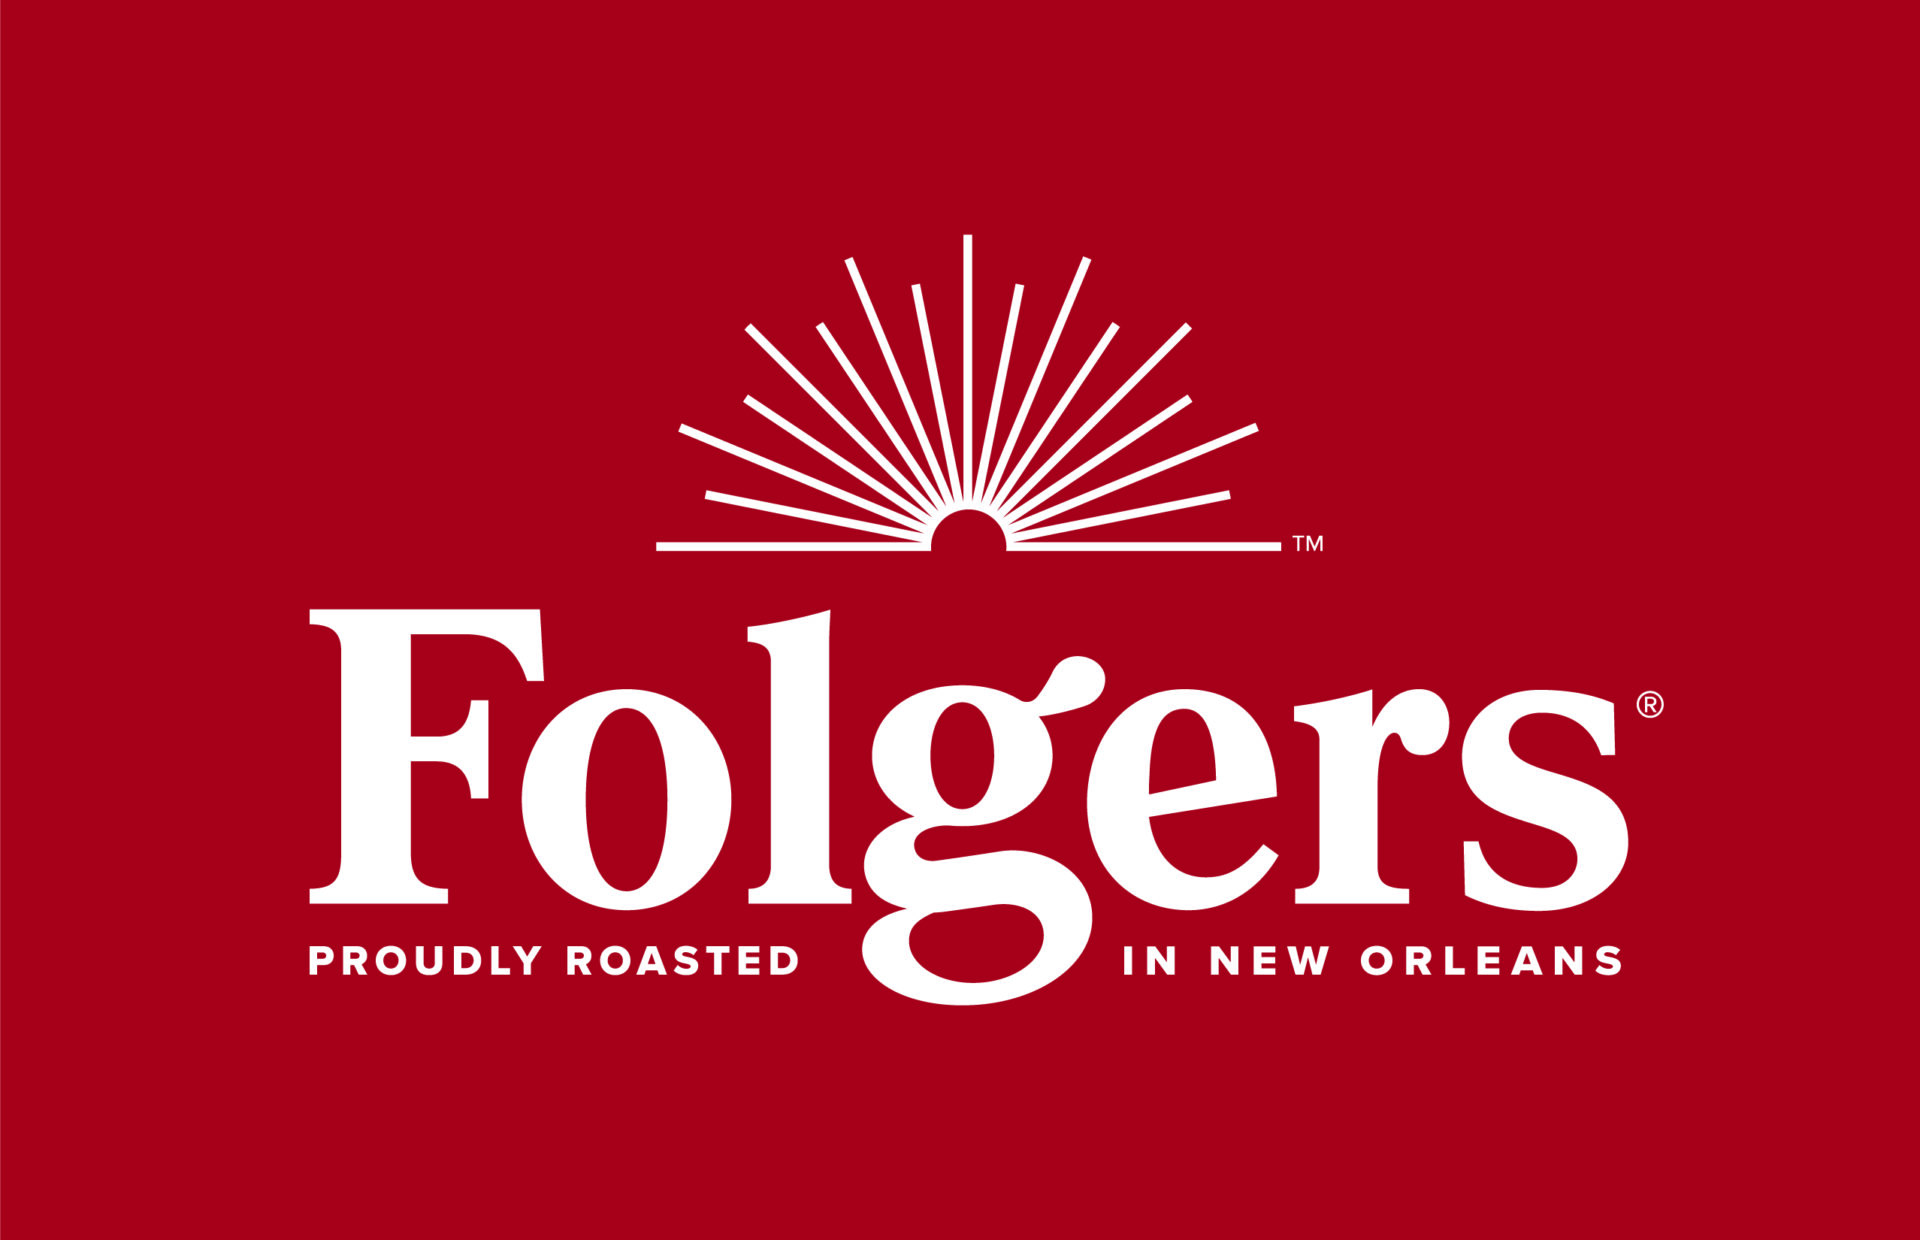 Brand: Folgers